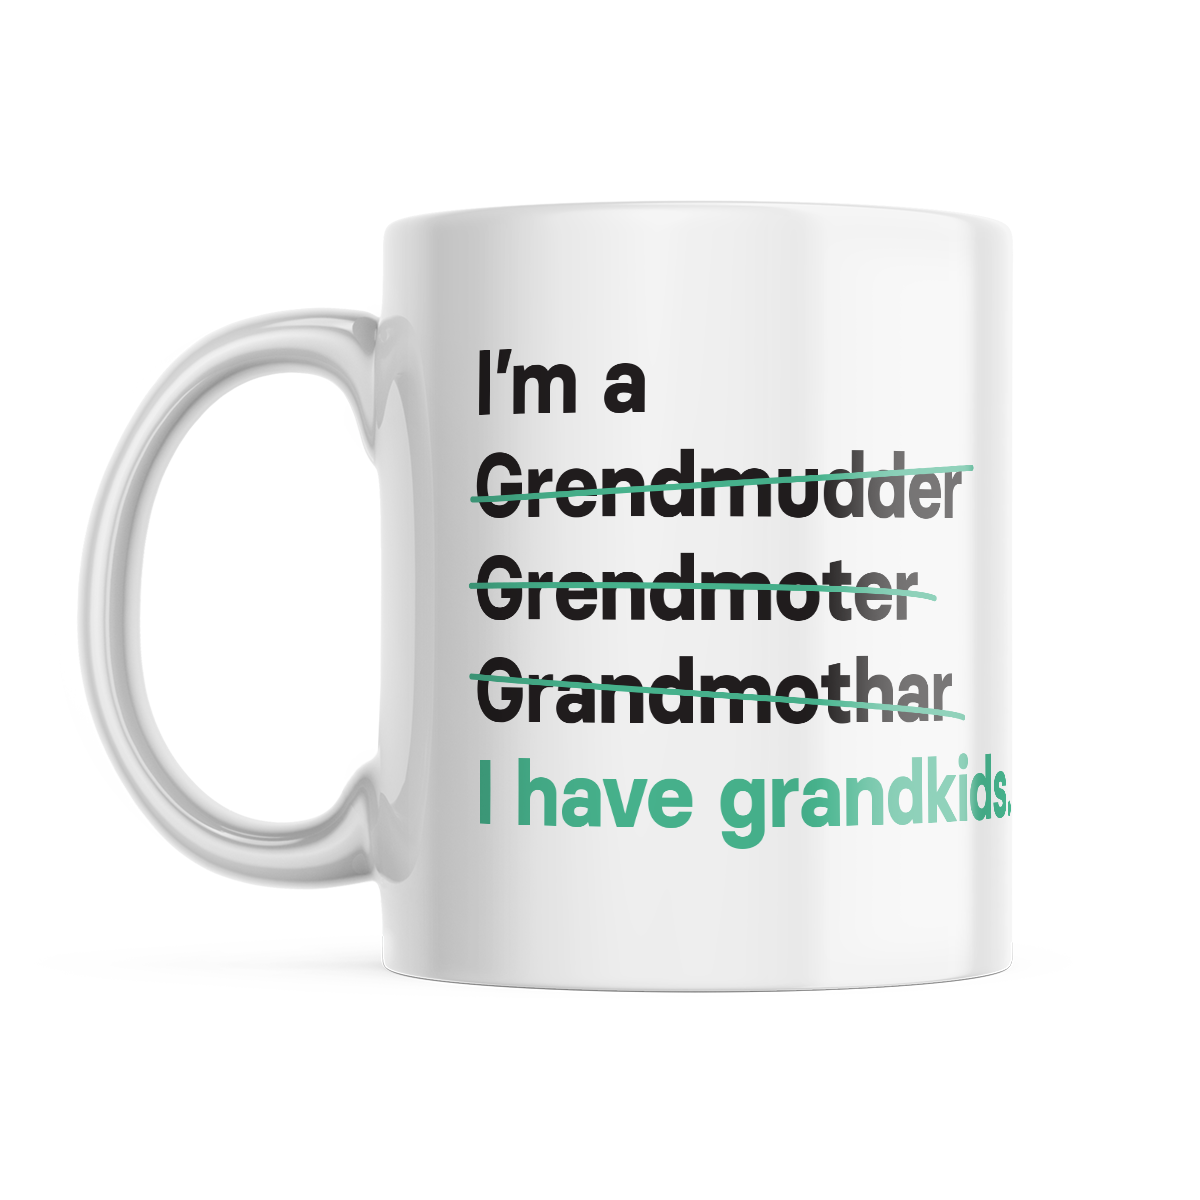 I'm a Grandmother